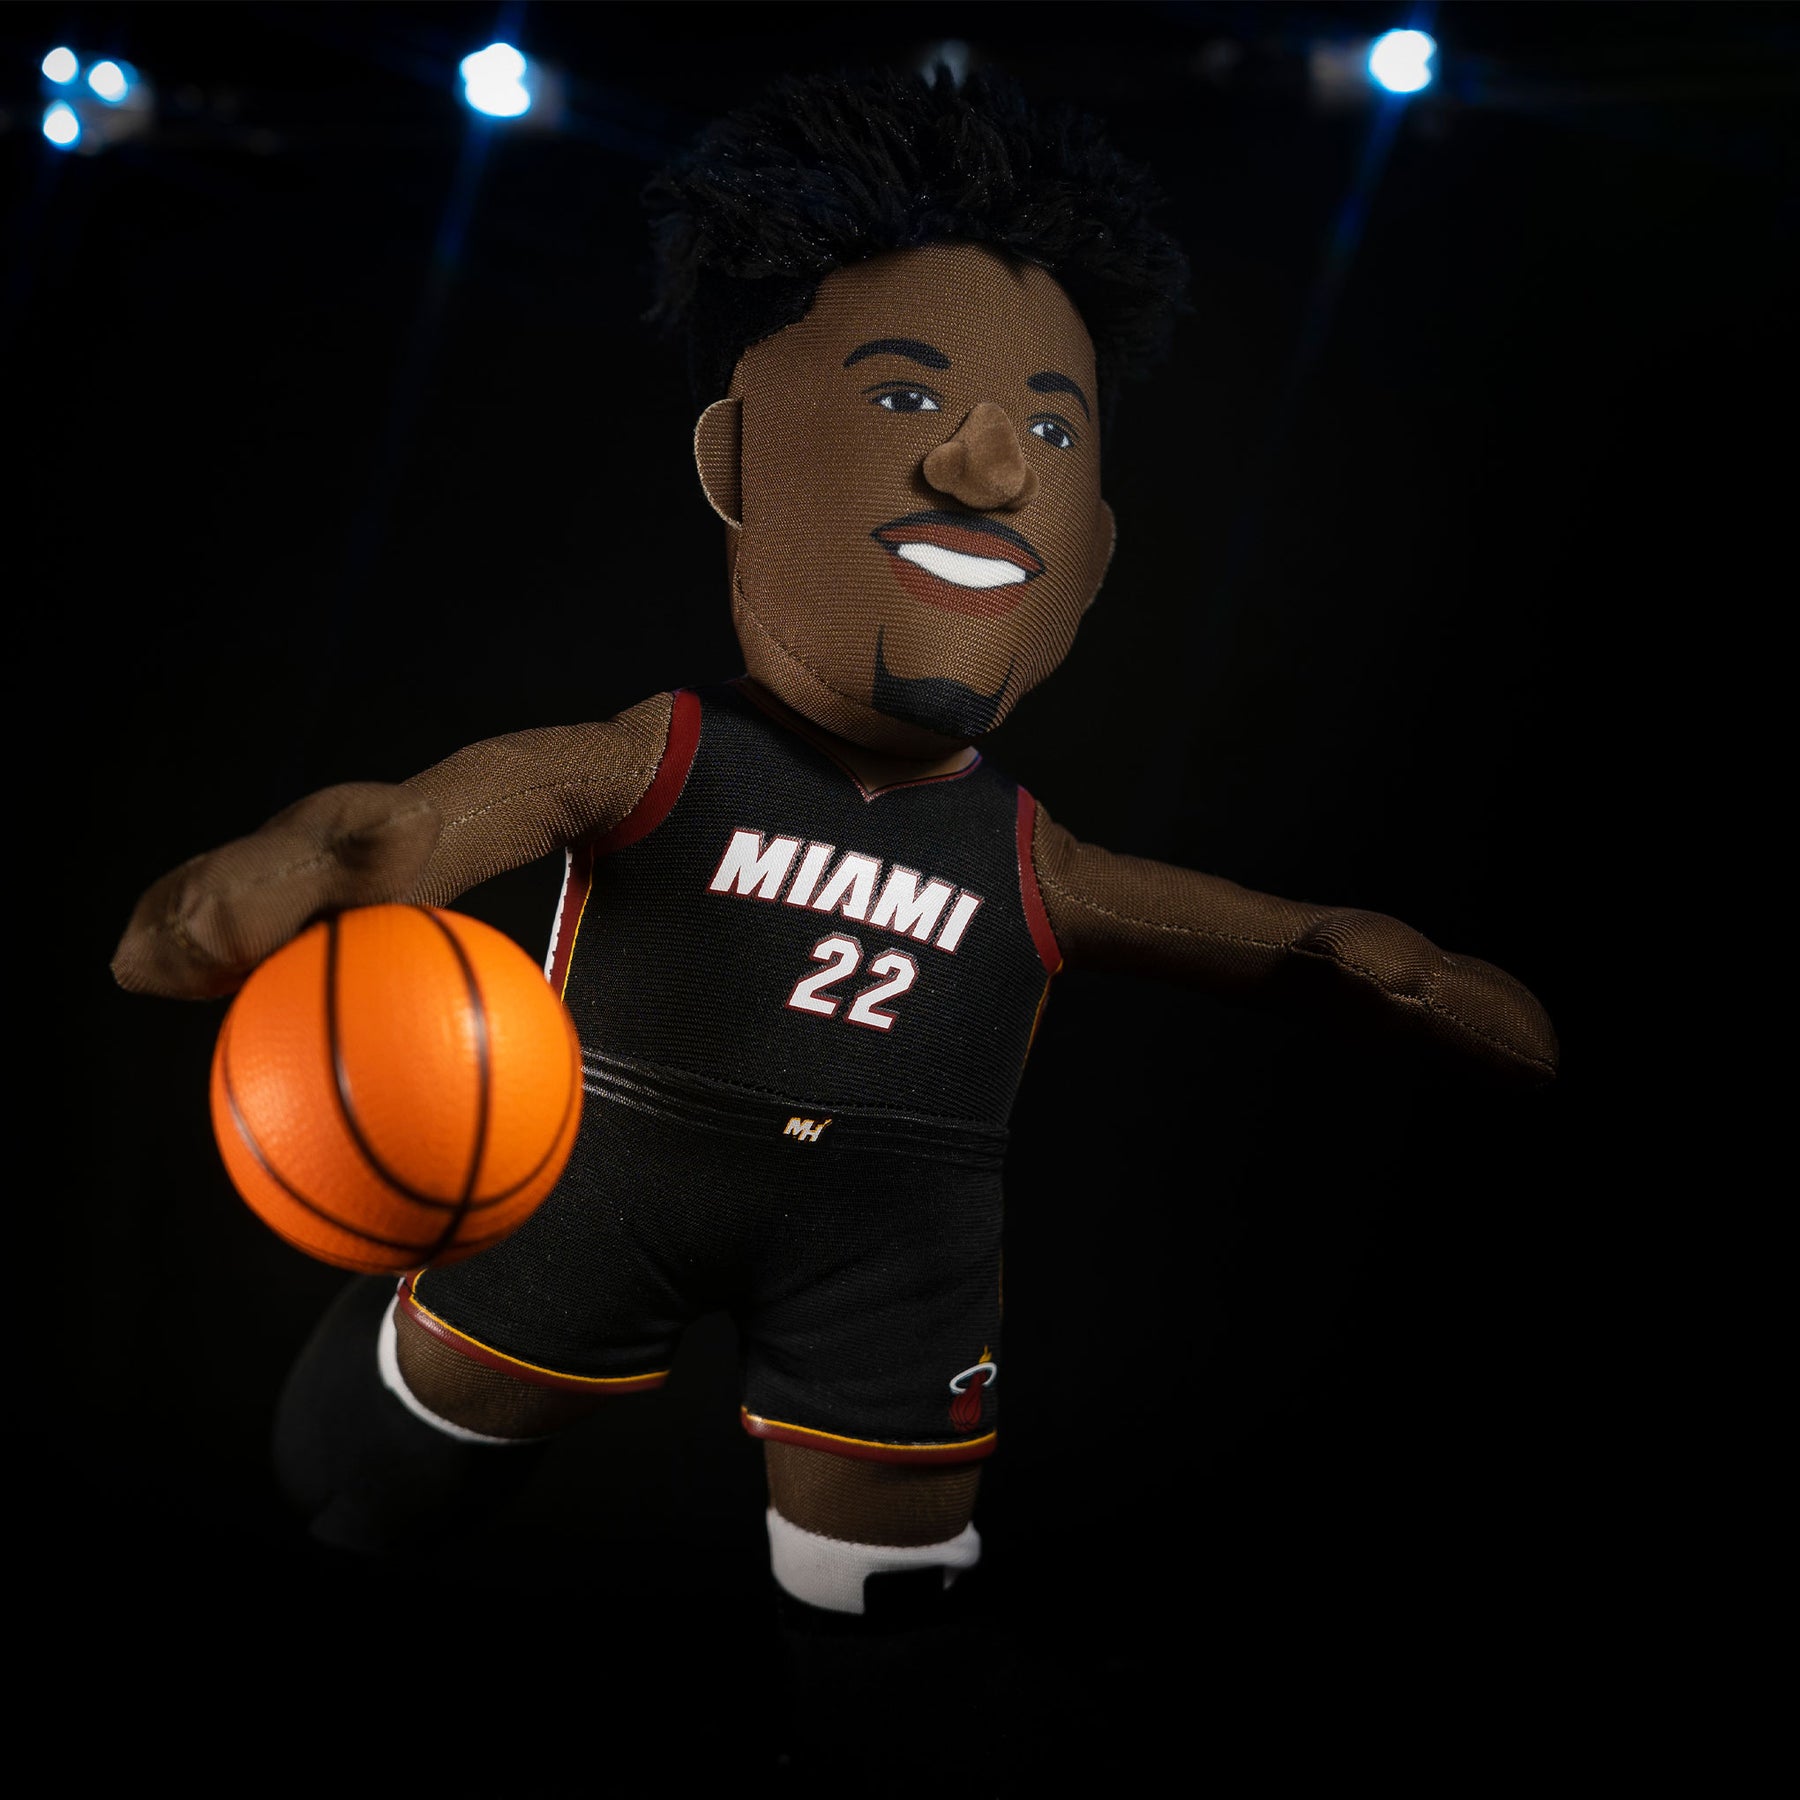 Miami Heat Jimmy Butler Plush Toy